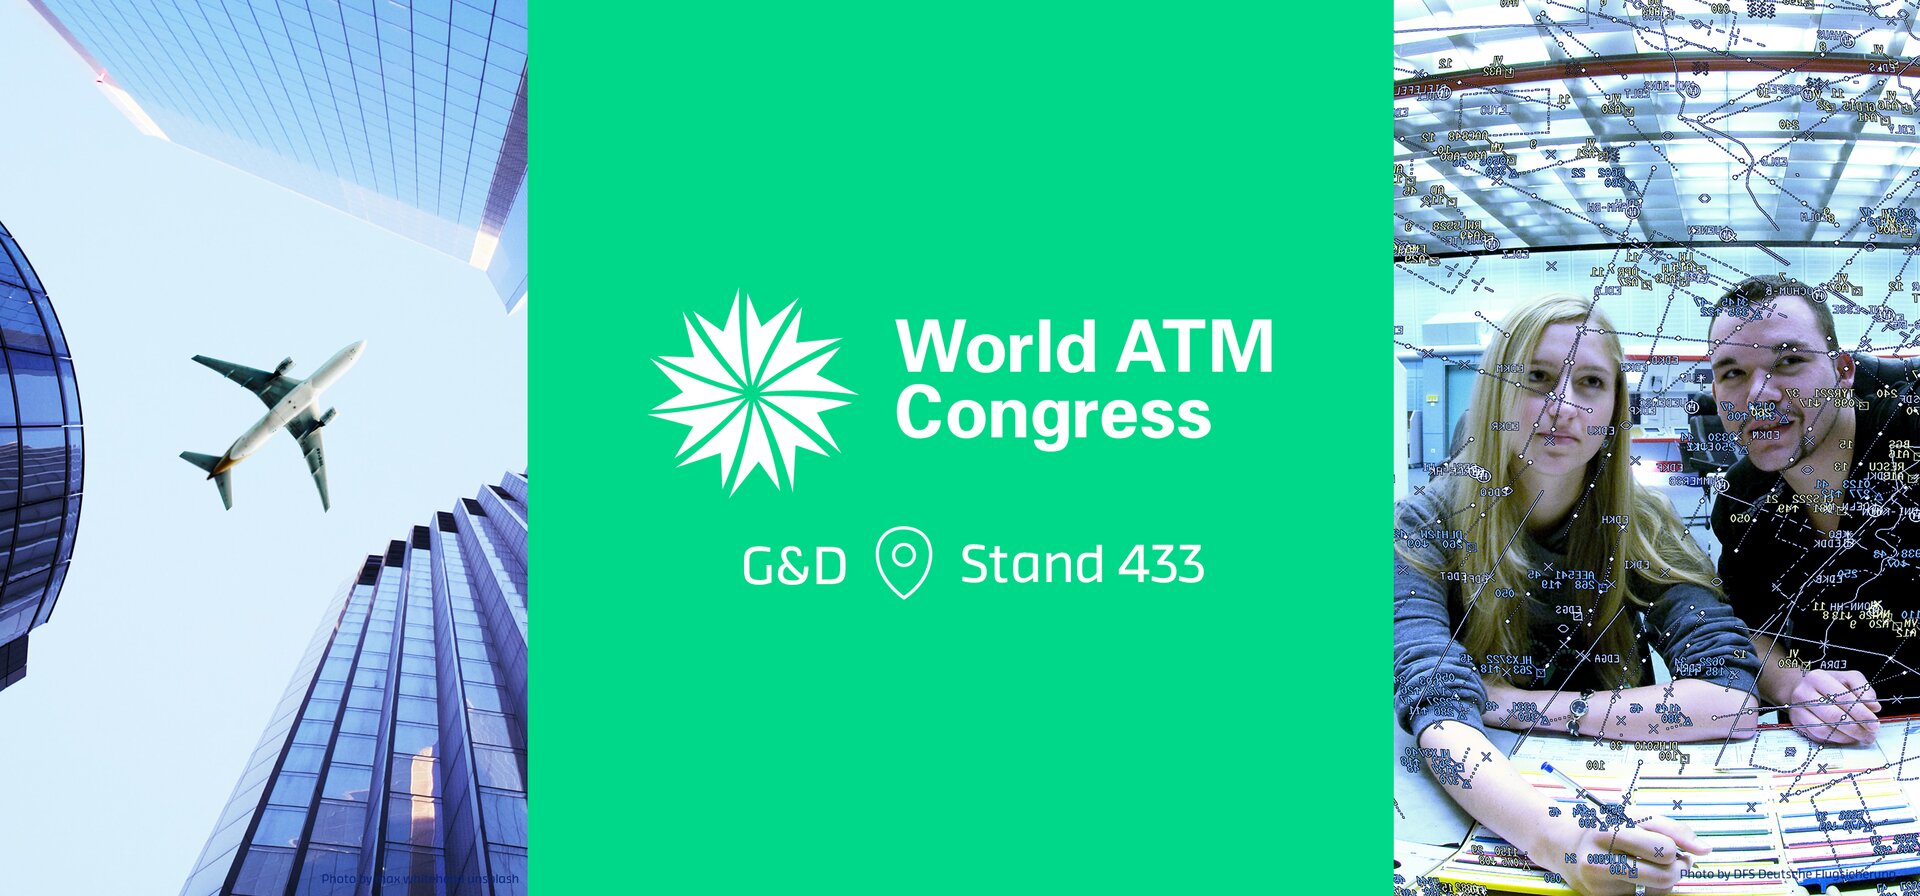 G&D at the World ATM Congress 2022